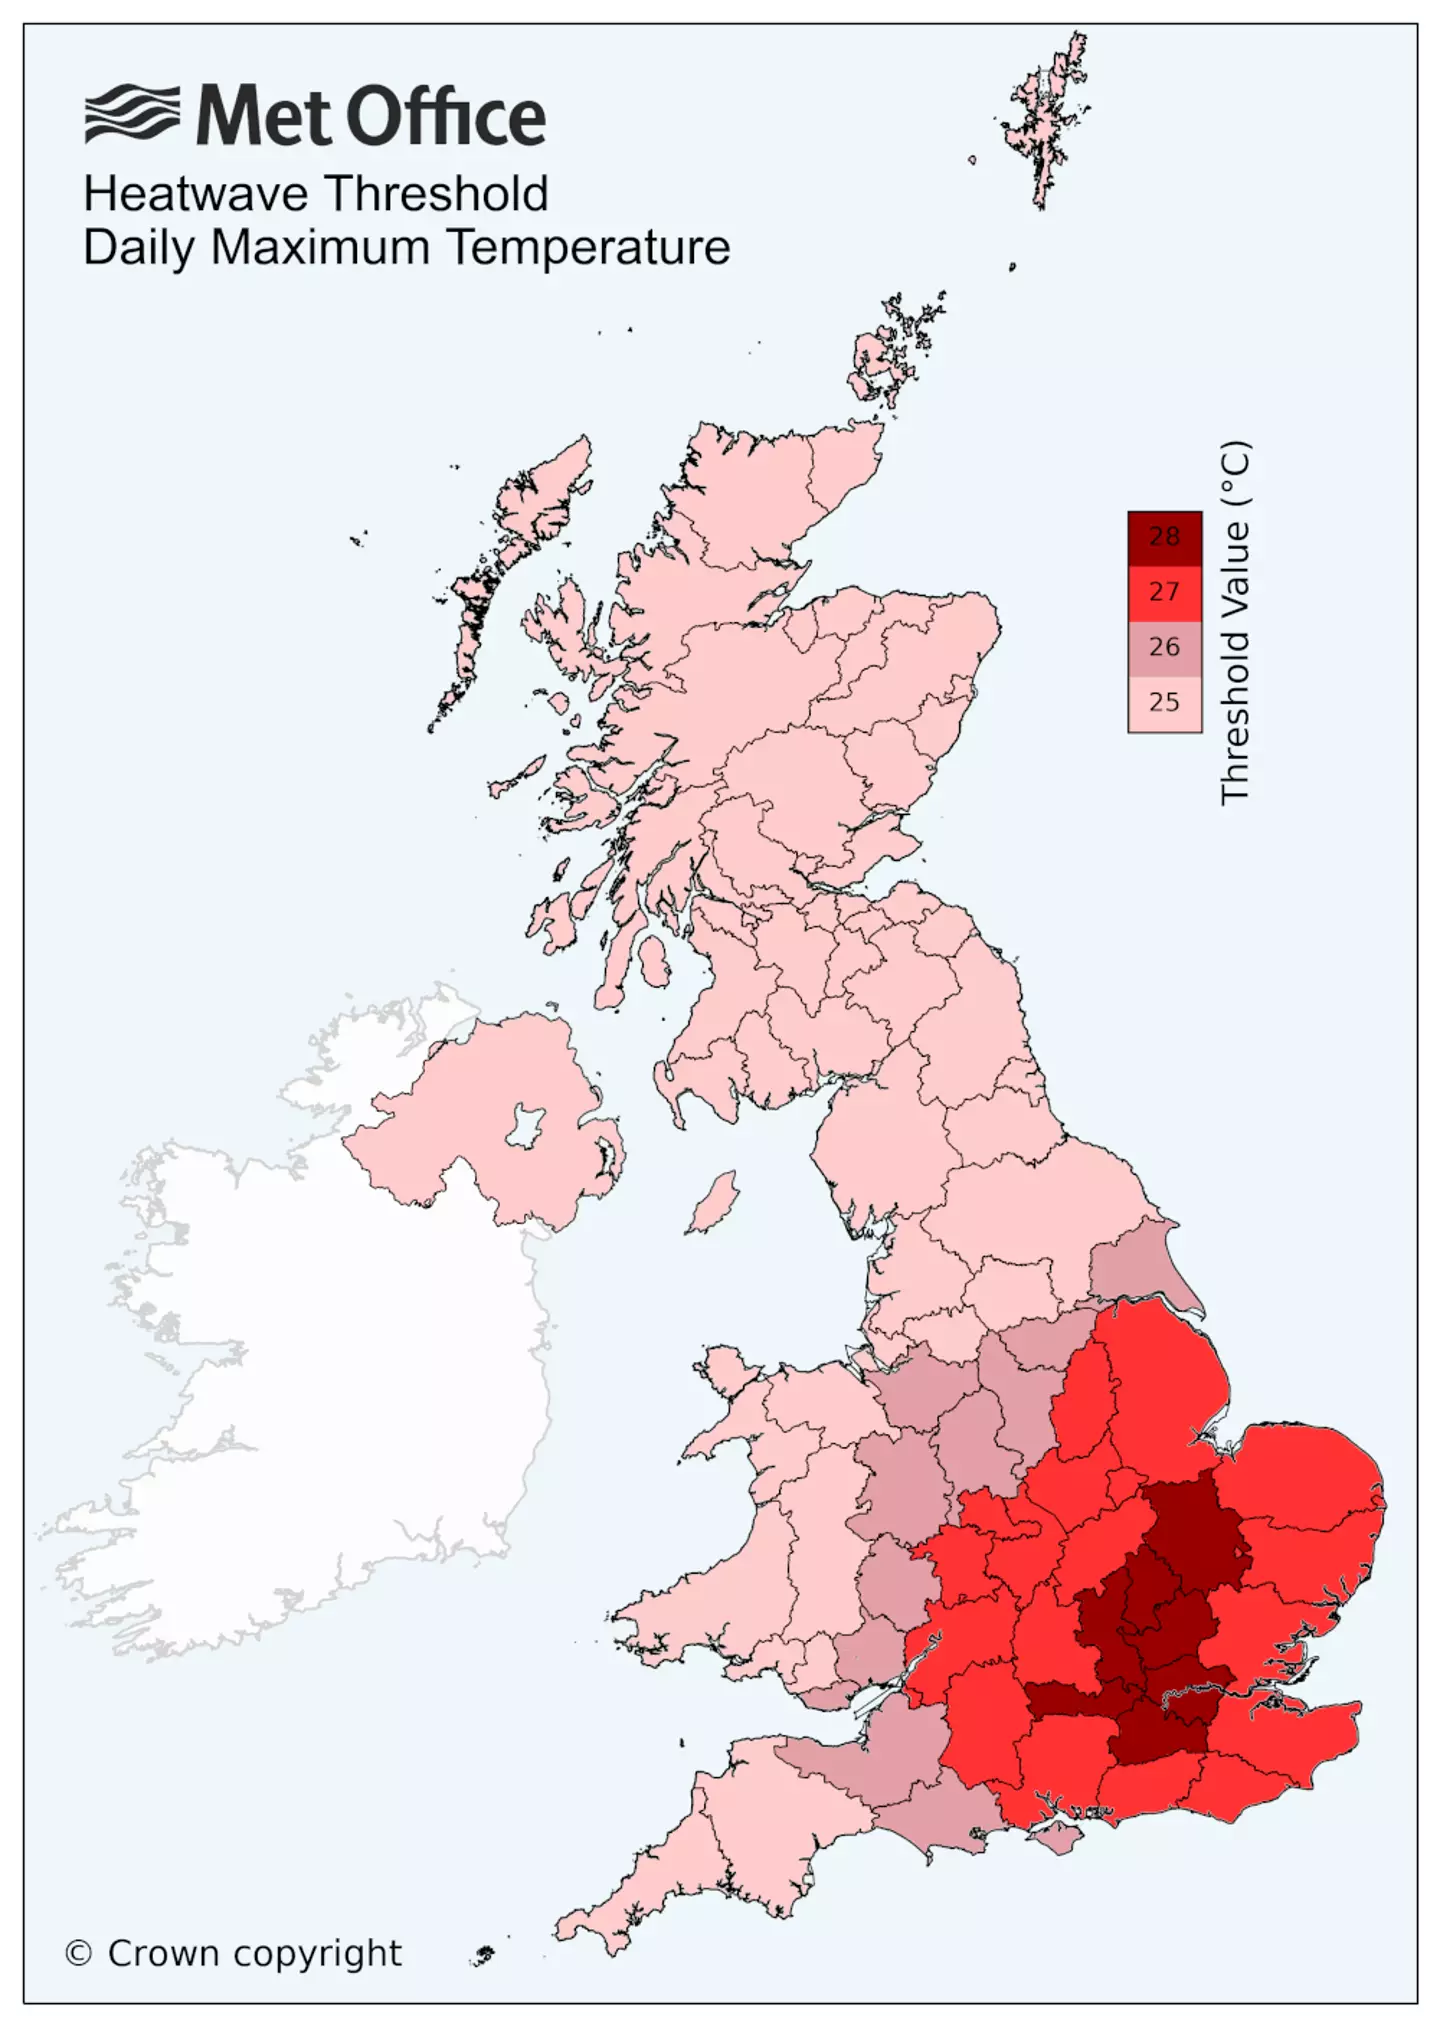 The UK heatwave classification system (Met Office)